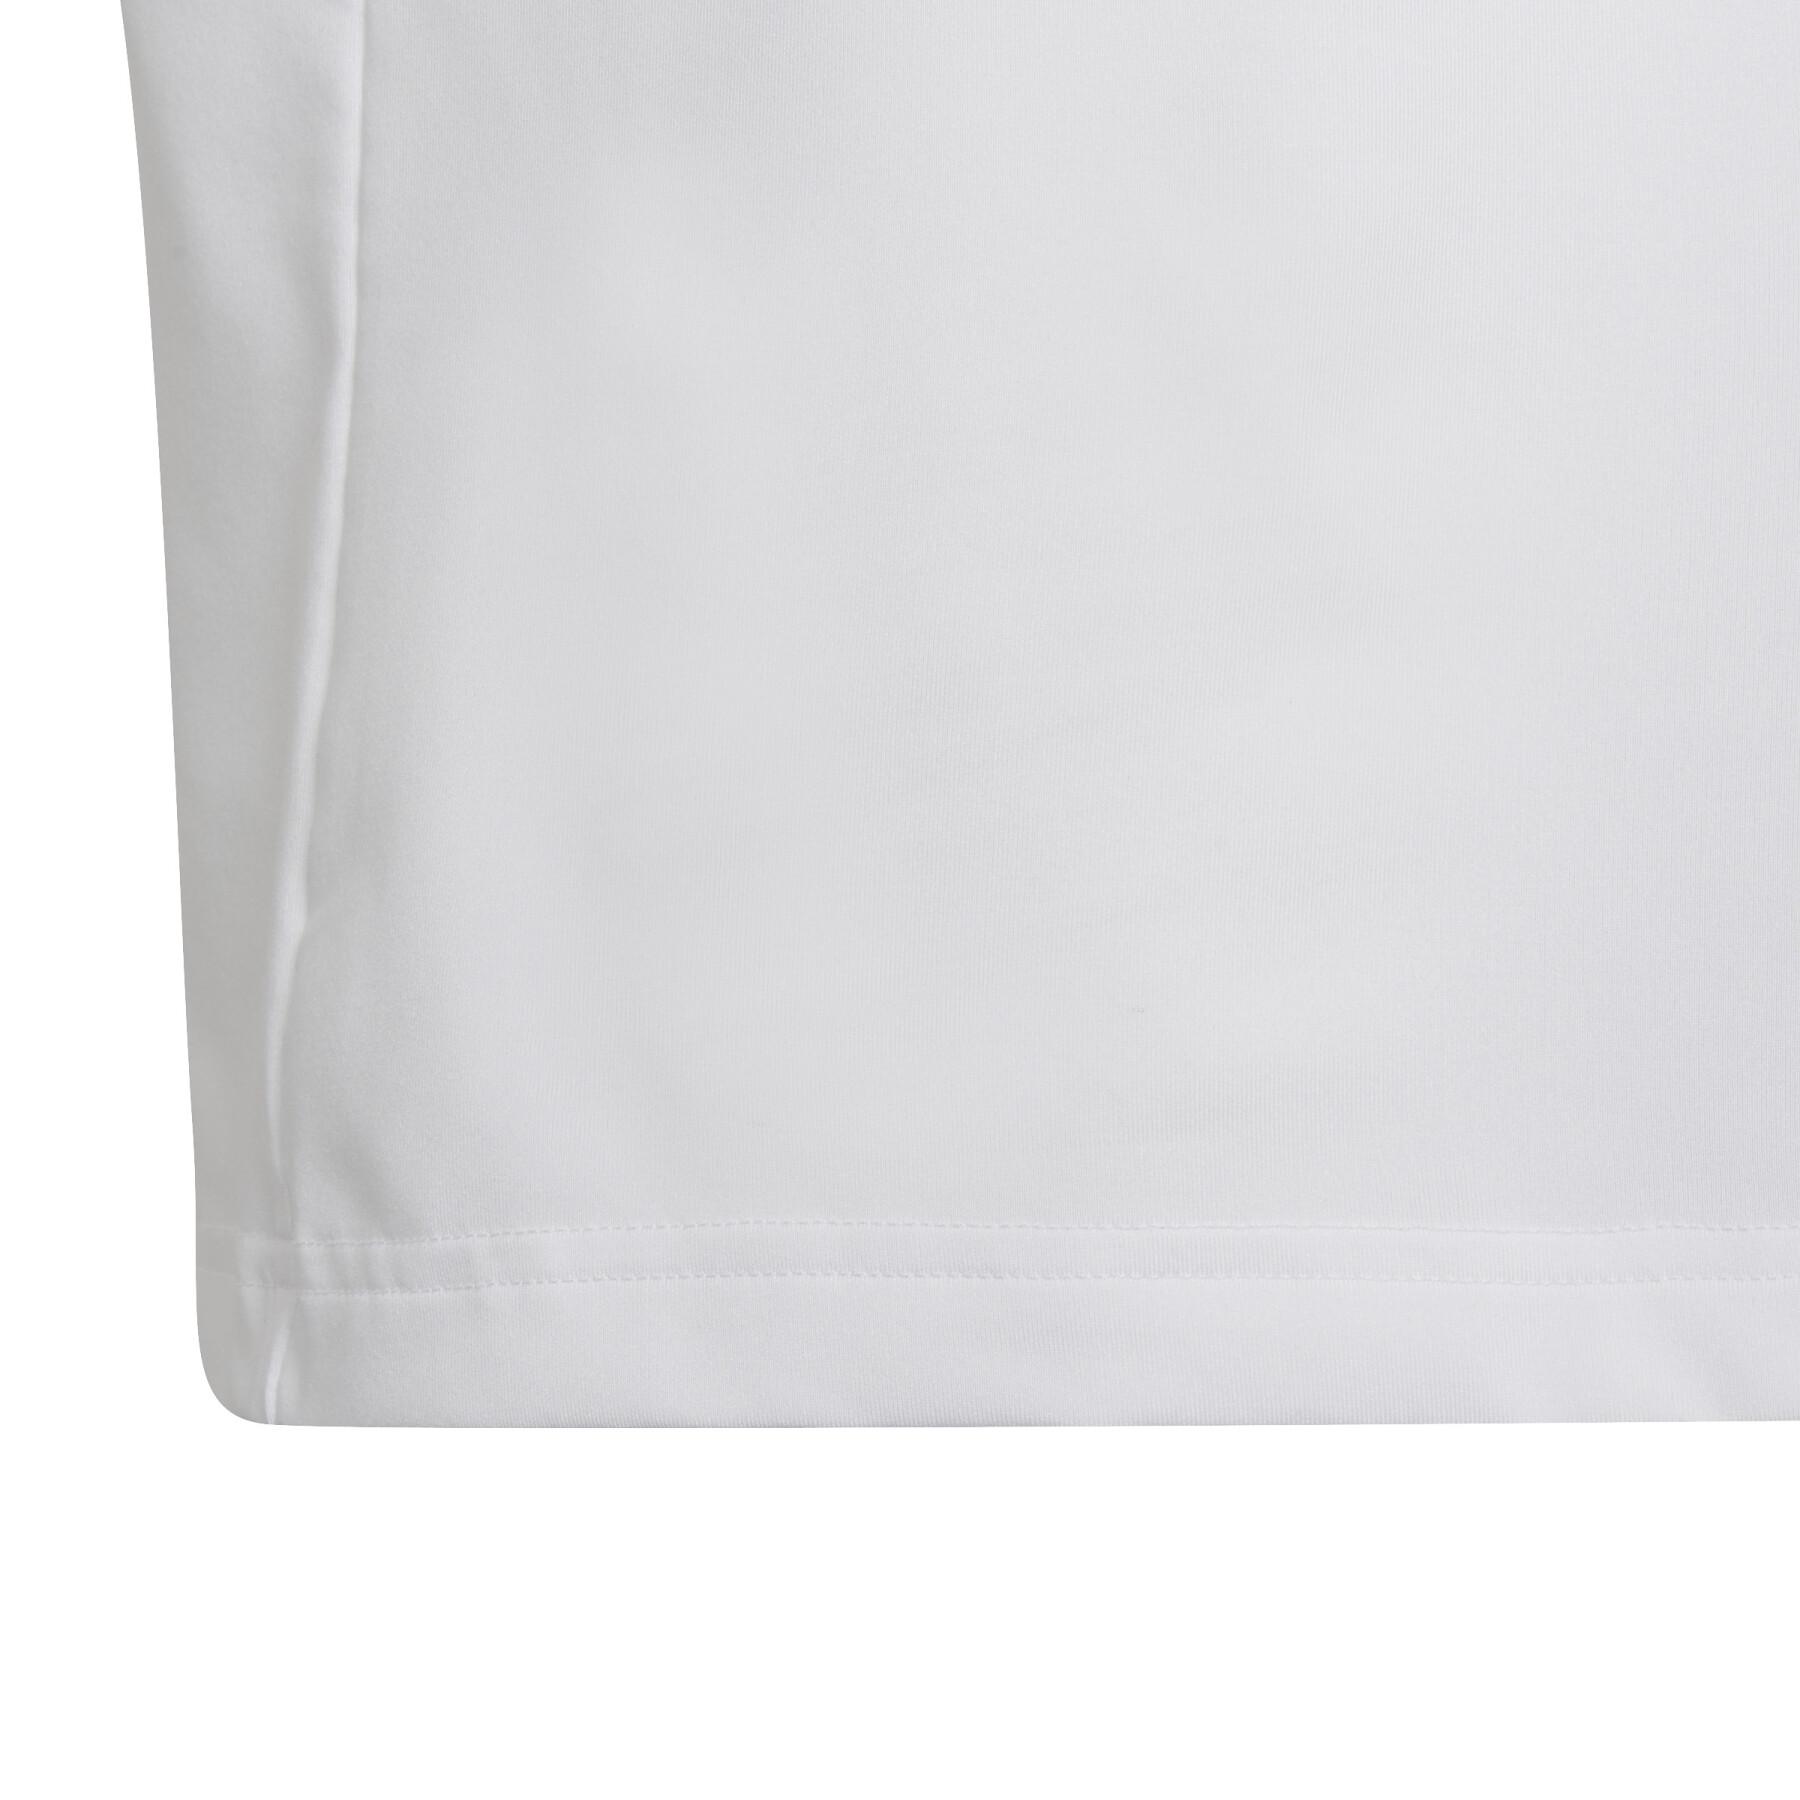 Mädchen-T-Shirt adidas x Marimekko Aeroready